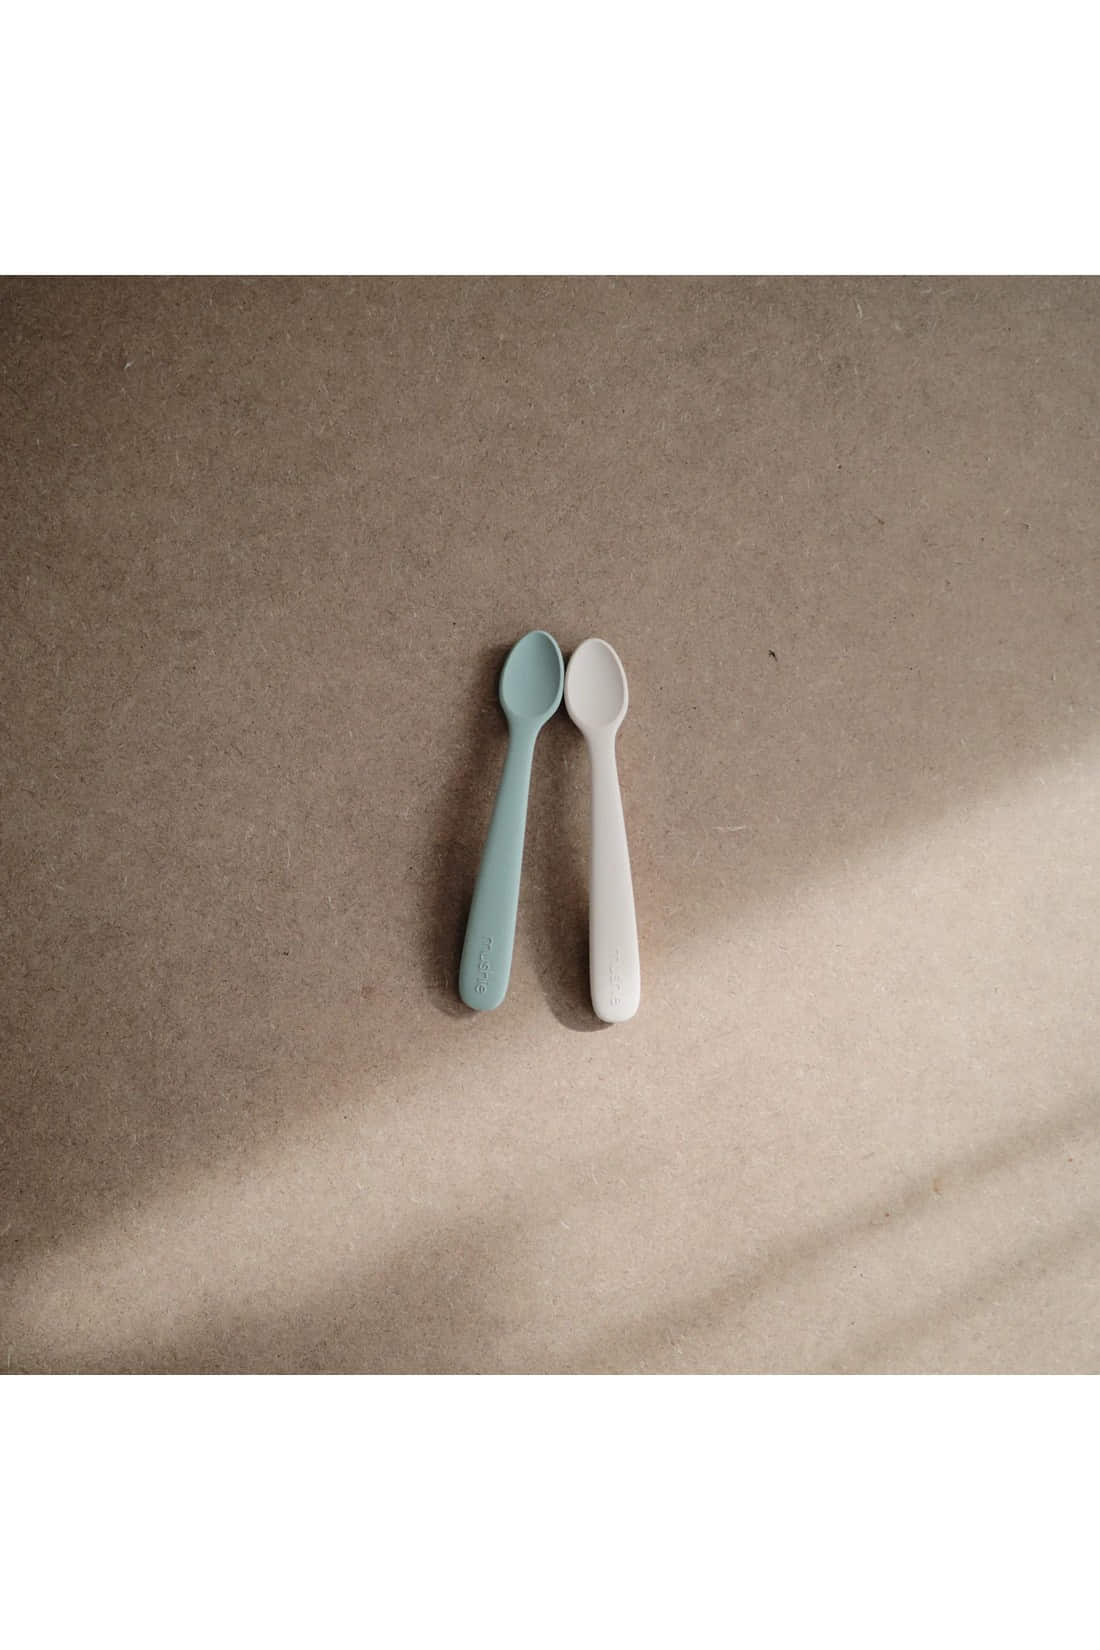 Mushie - 2Pk Silicone Feeding Spoons, Cambridge Blue/Shifting Sand